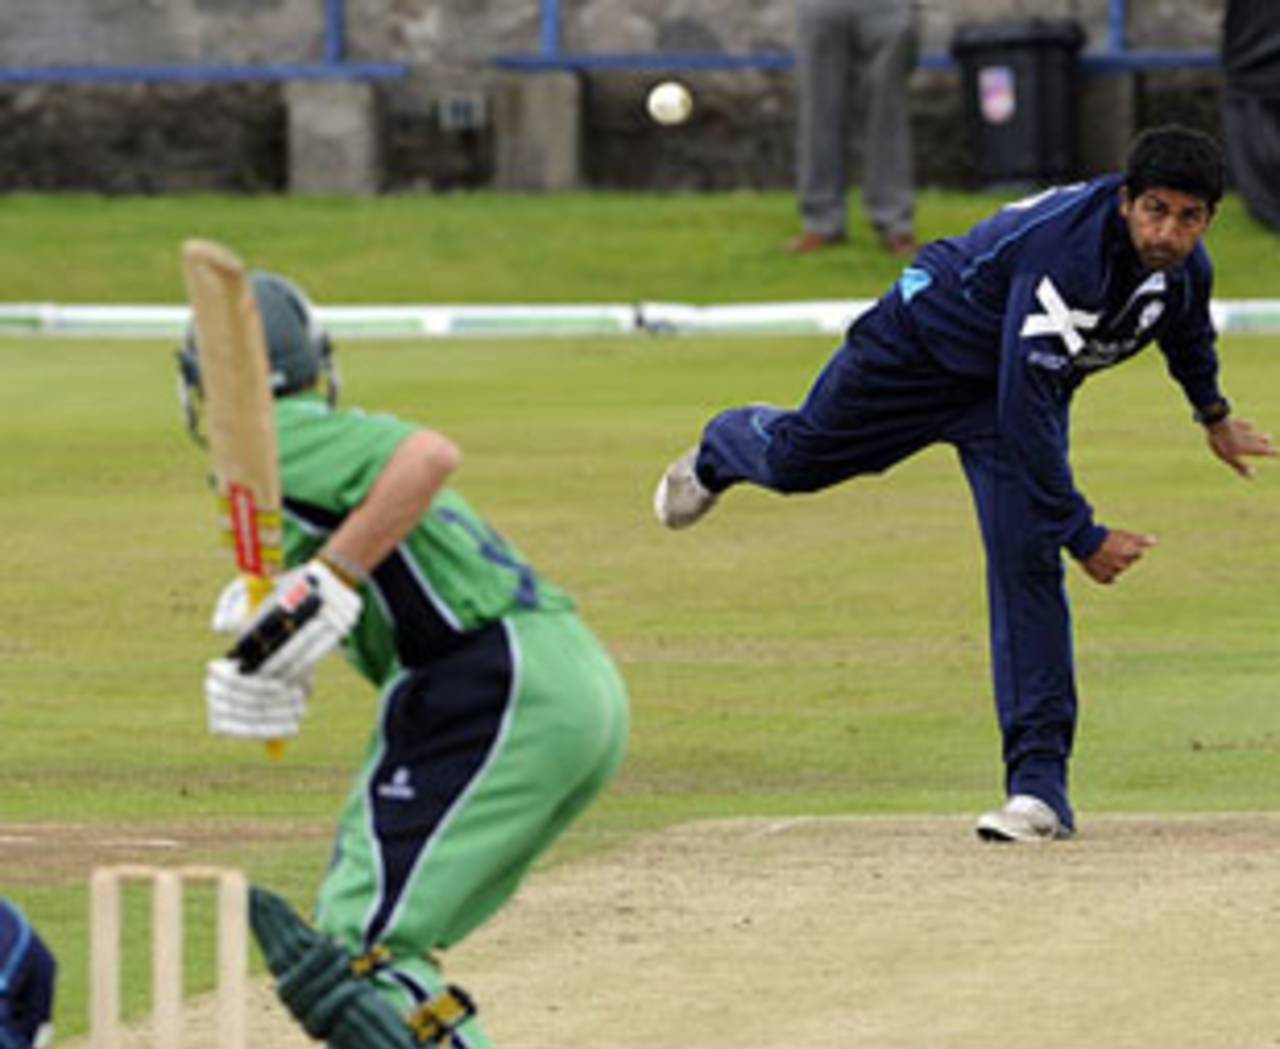 Majid Haq took 2 for 18, Scotland v Ireland, 1st ODI, Aberdeen, August 22, 2009